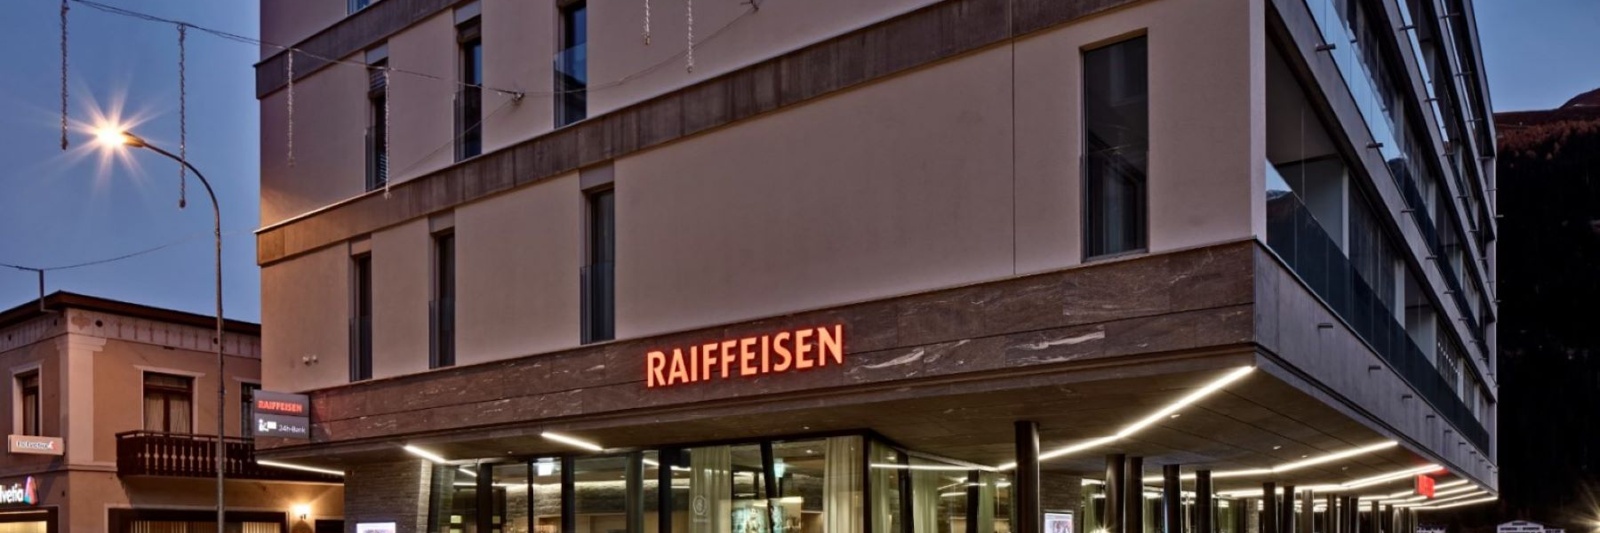 Raiffeisenbank Prättigau-Davos